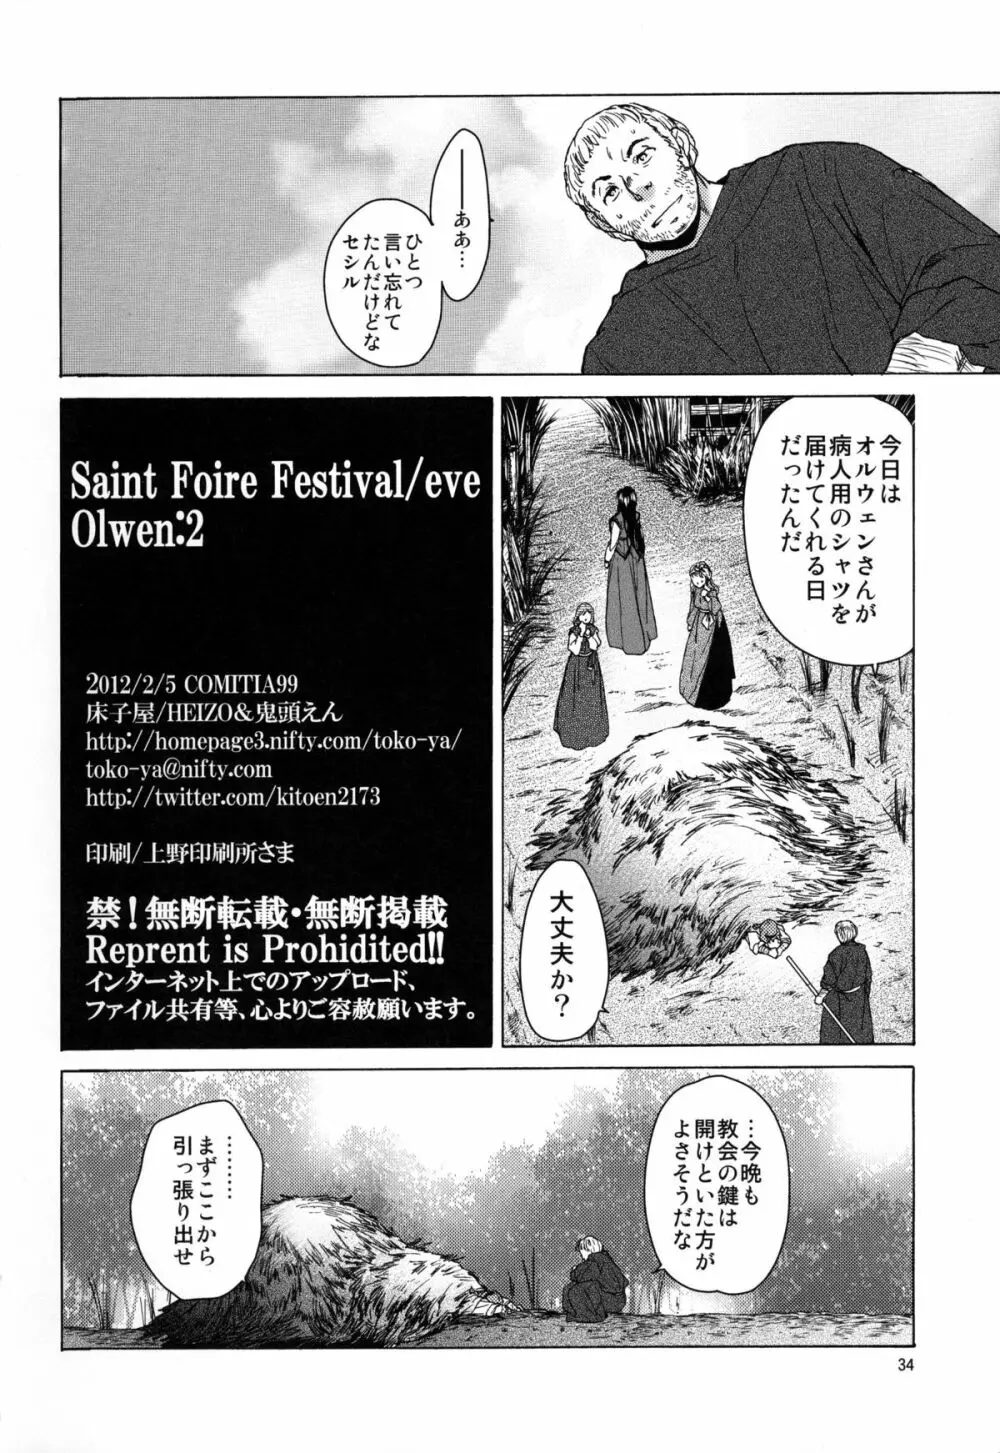 Saint Foire Festival/eve Olwen:2 34ページ